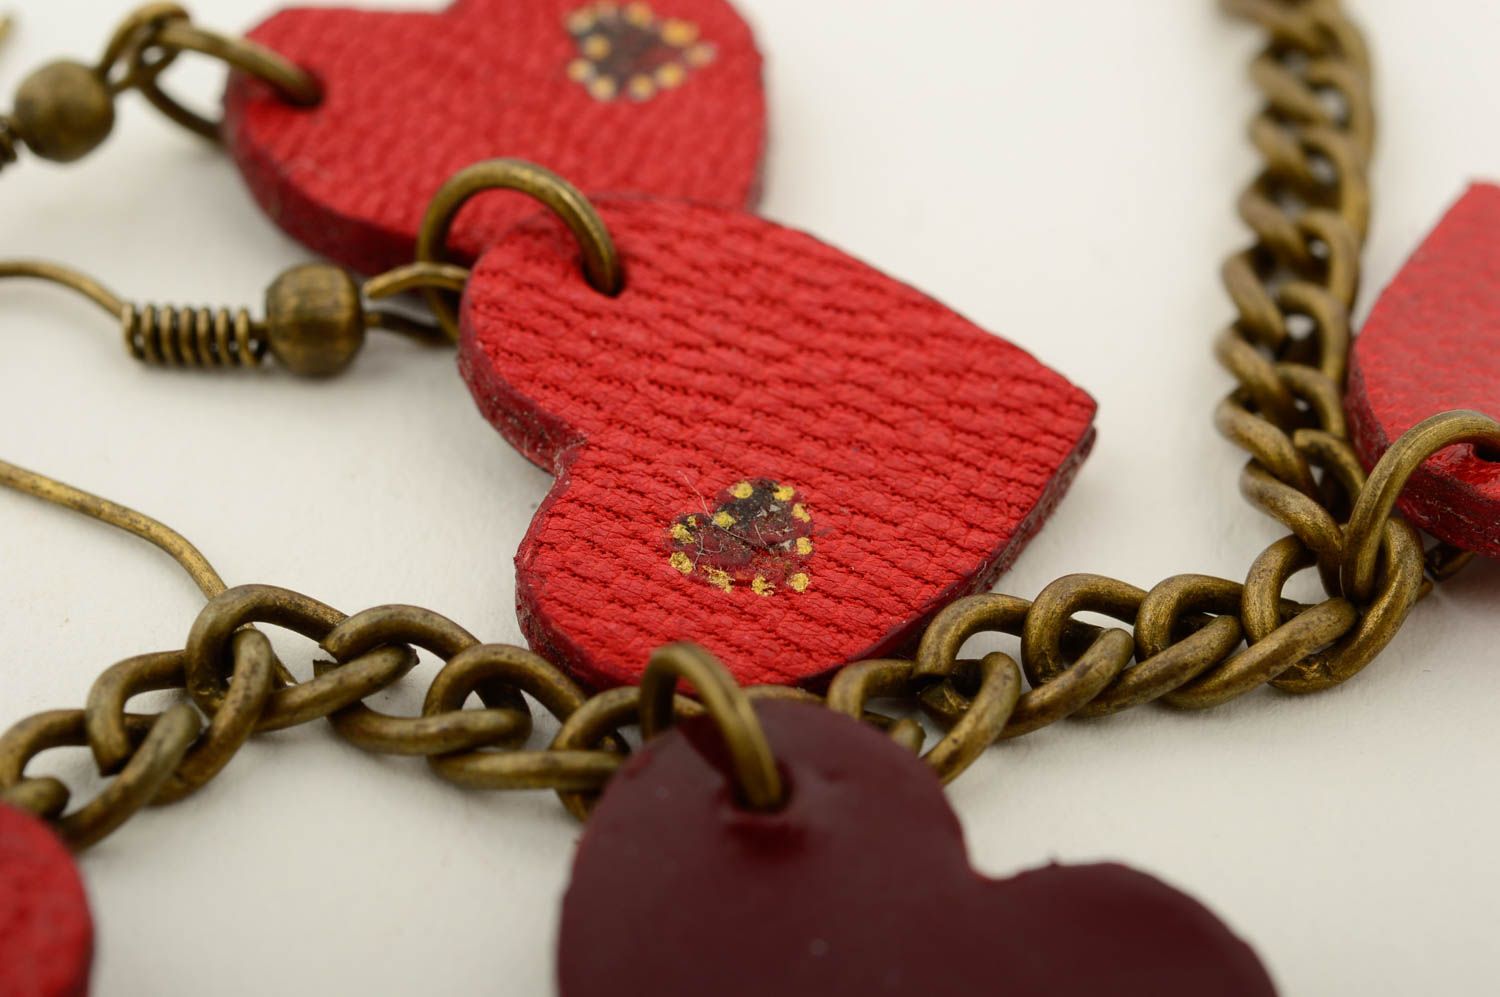 Stylish handmade leather earrings necklace design costume jewelry set ideas photo 5